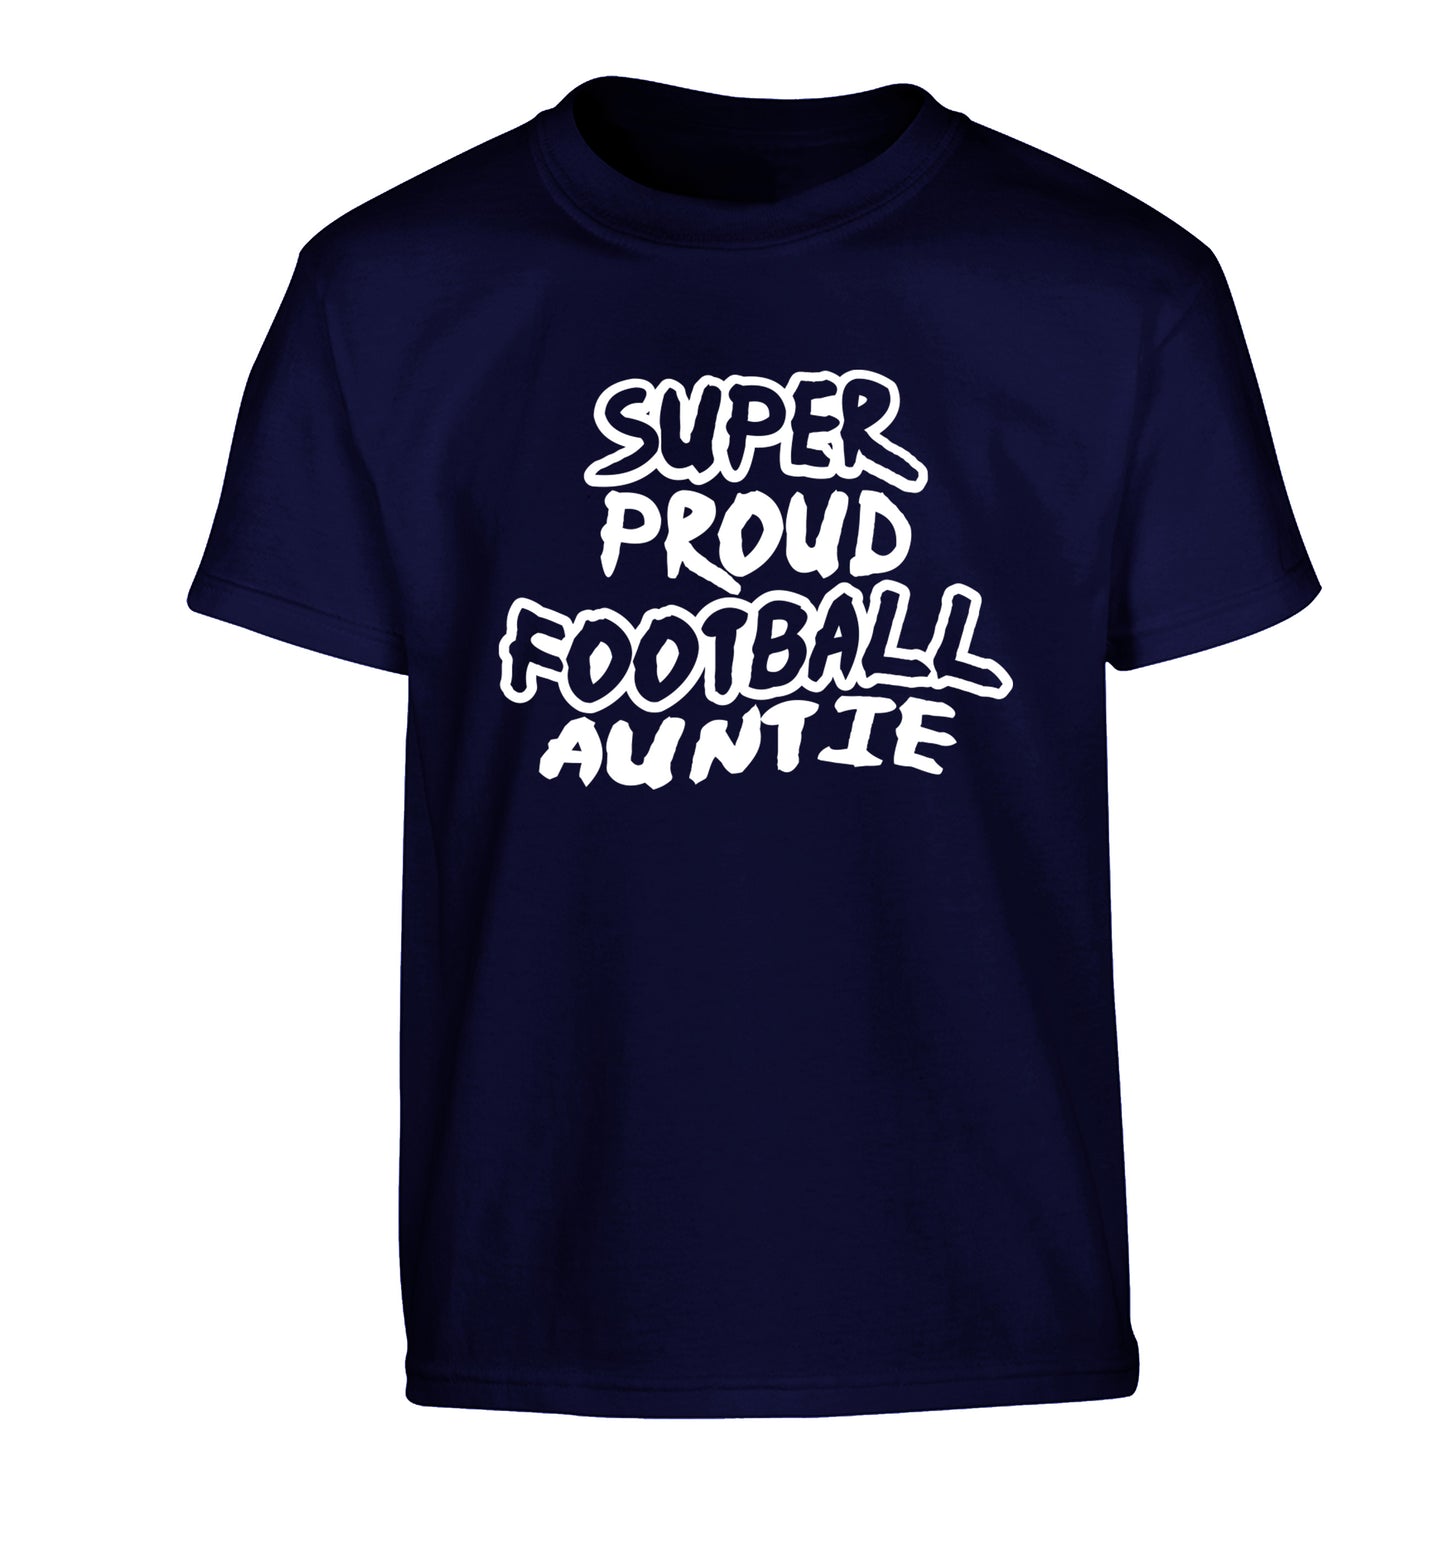 Super proud football auntie Children's navy Tshirt 12-14 Years